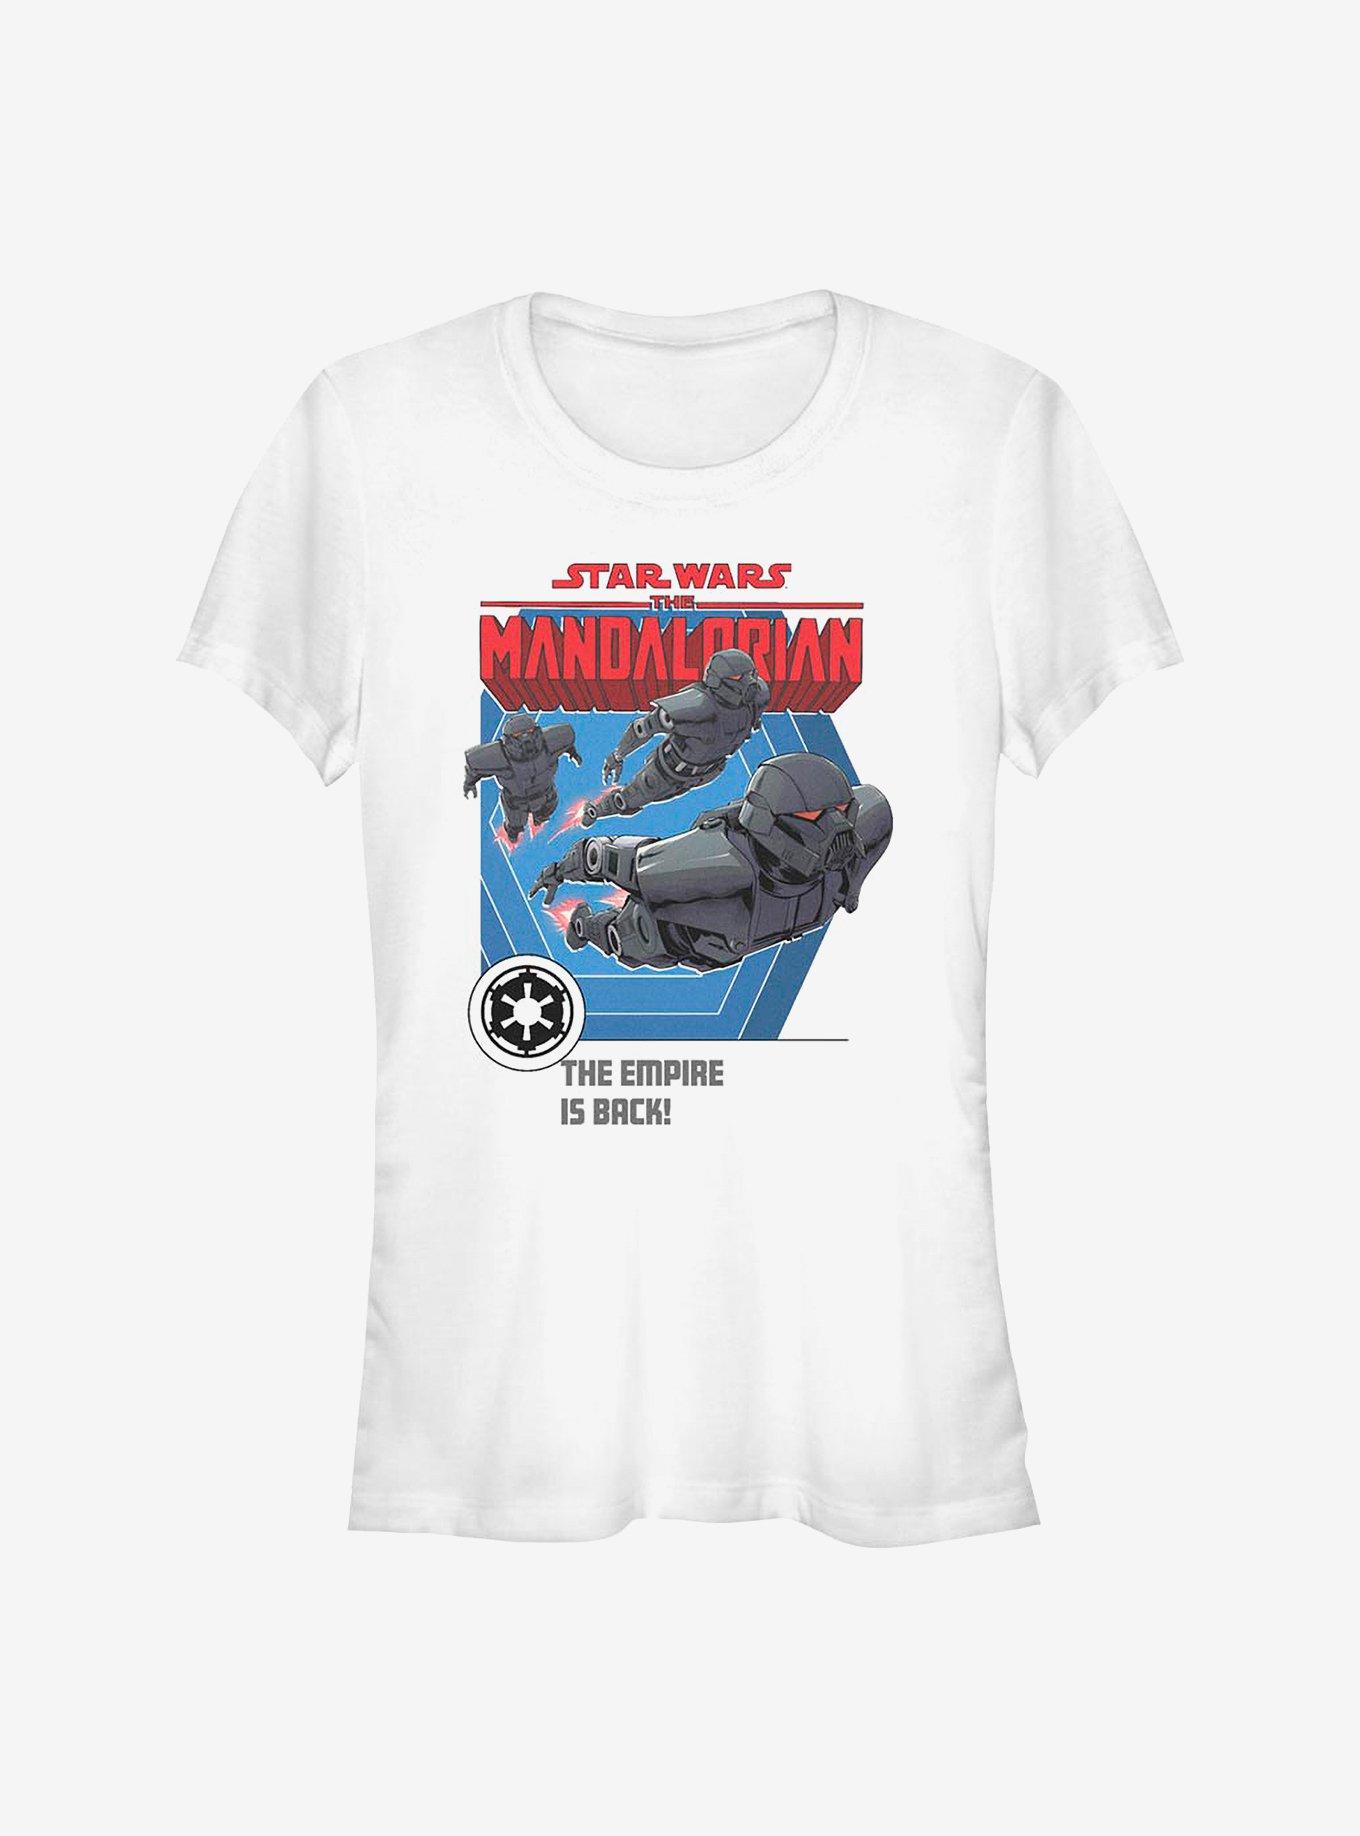 Star Wars The Mandalorian Empire Returns Girls T-Shirt